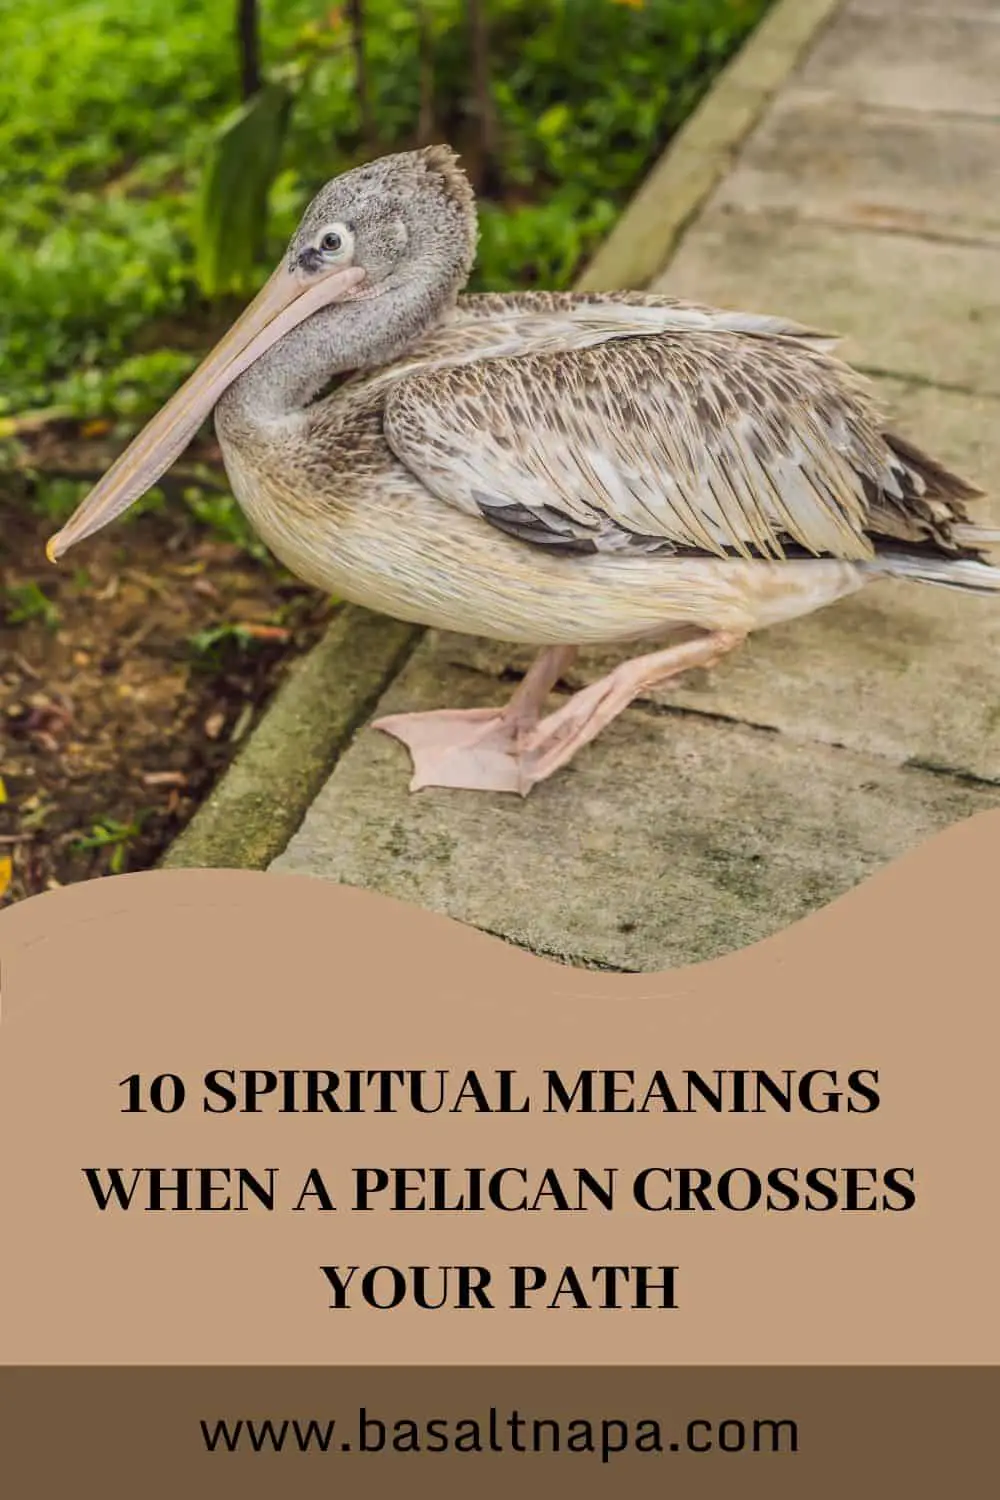 Symbolism Of The Pelican